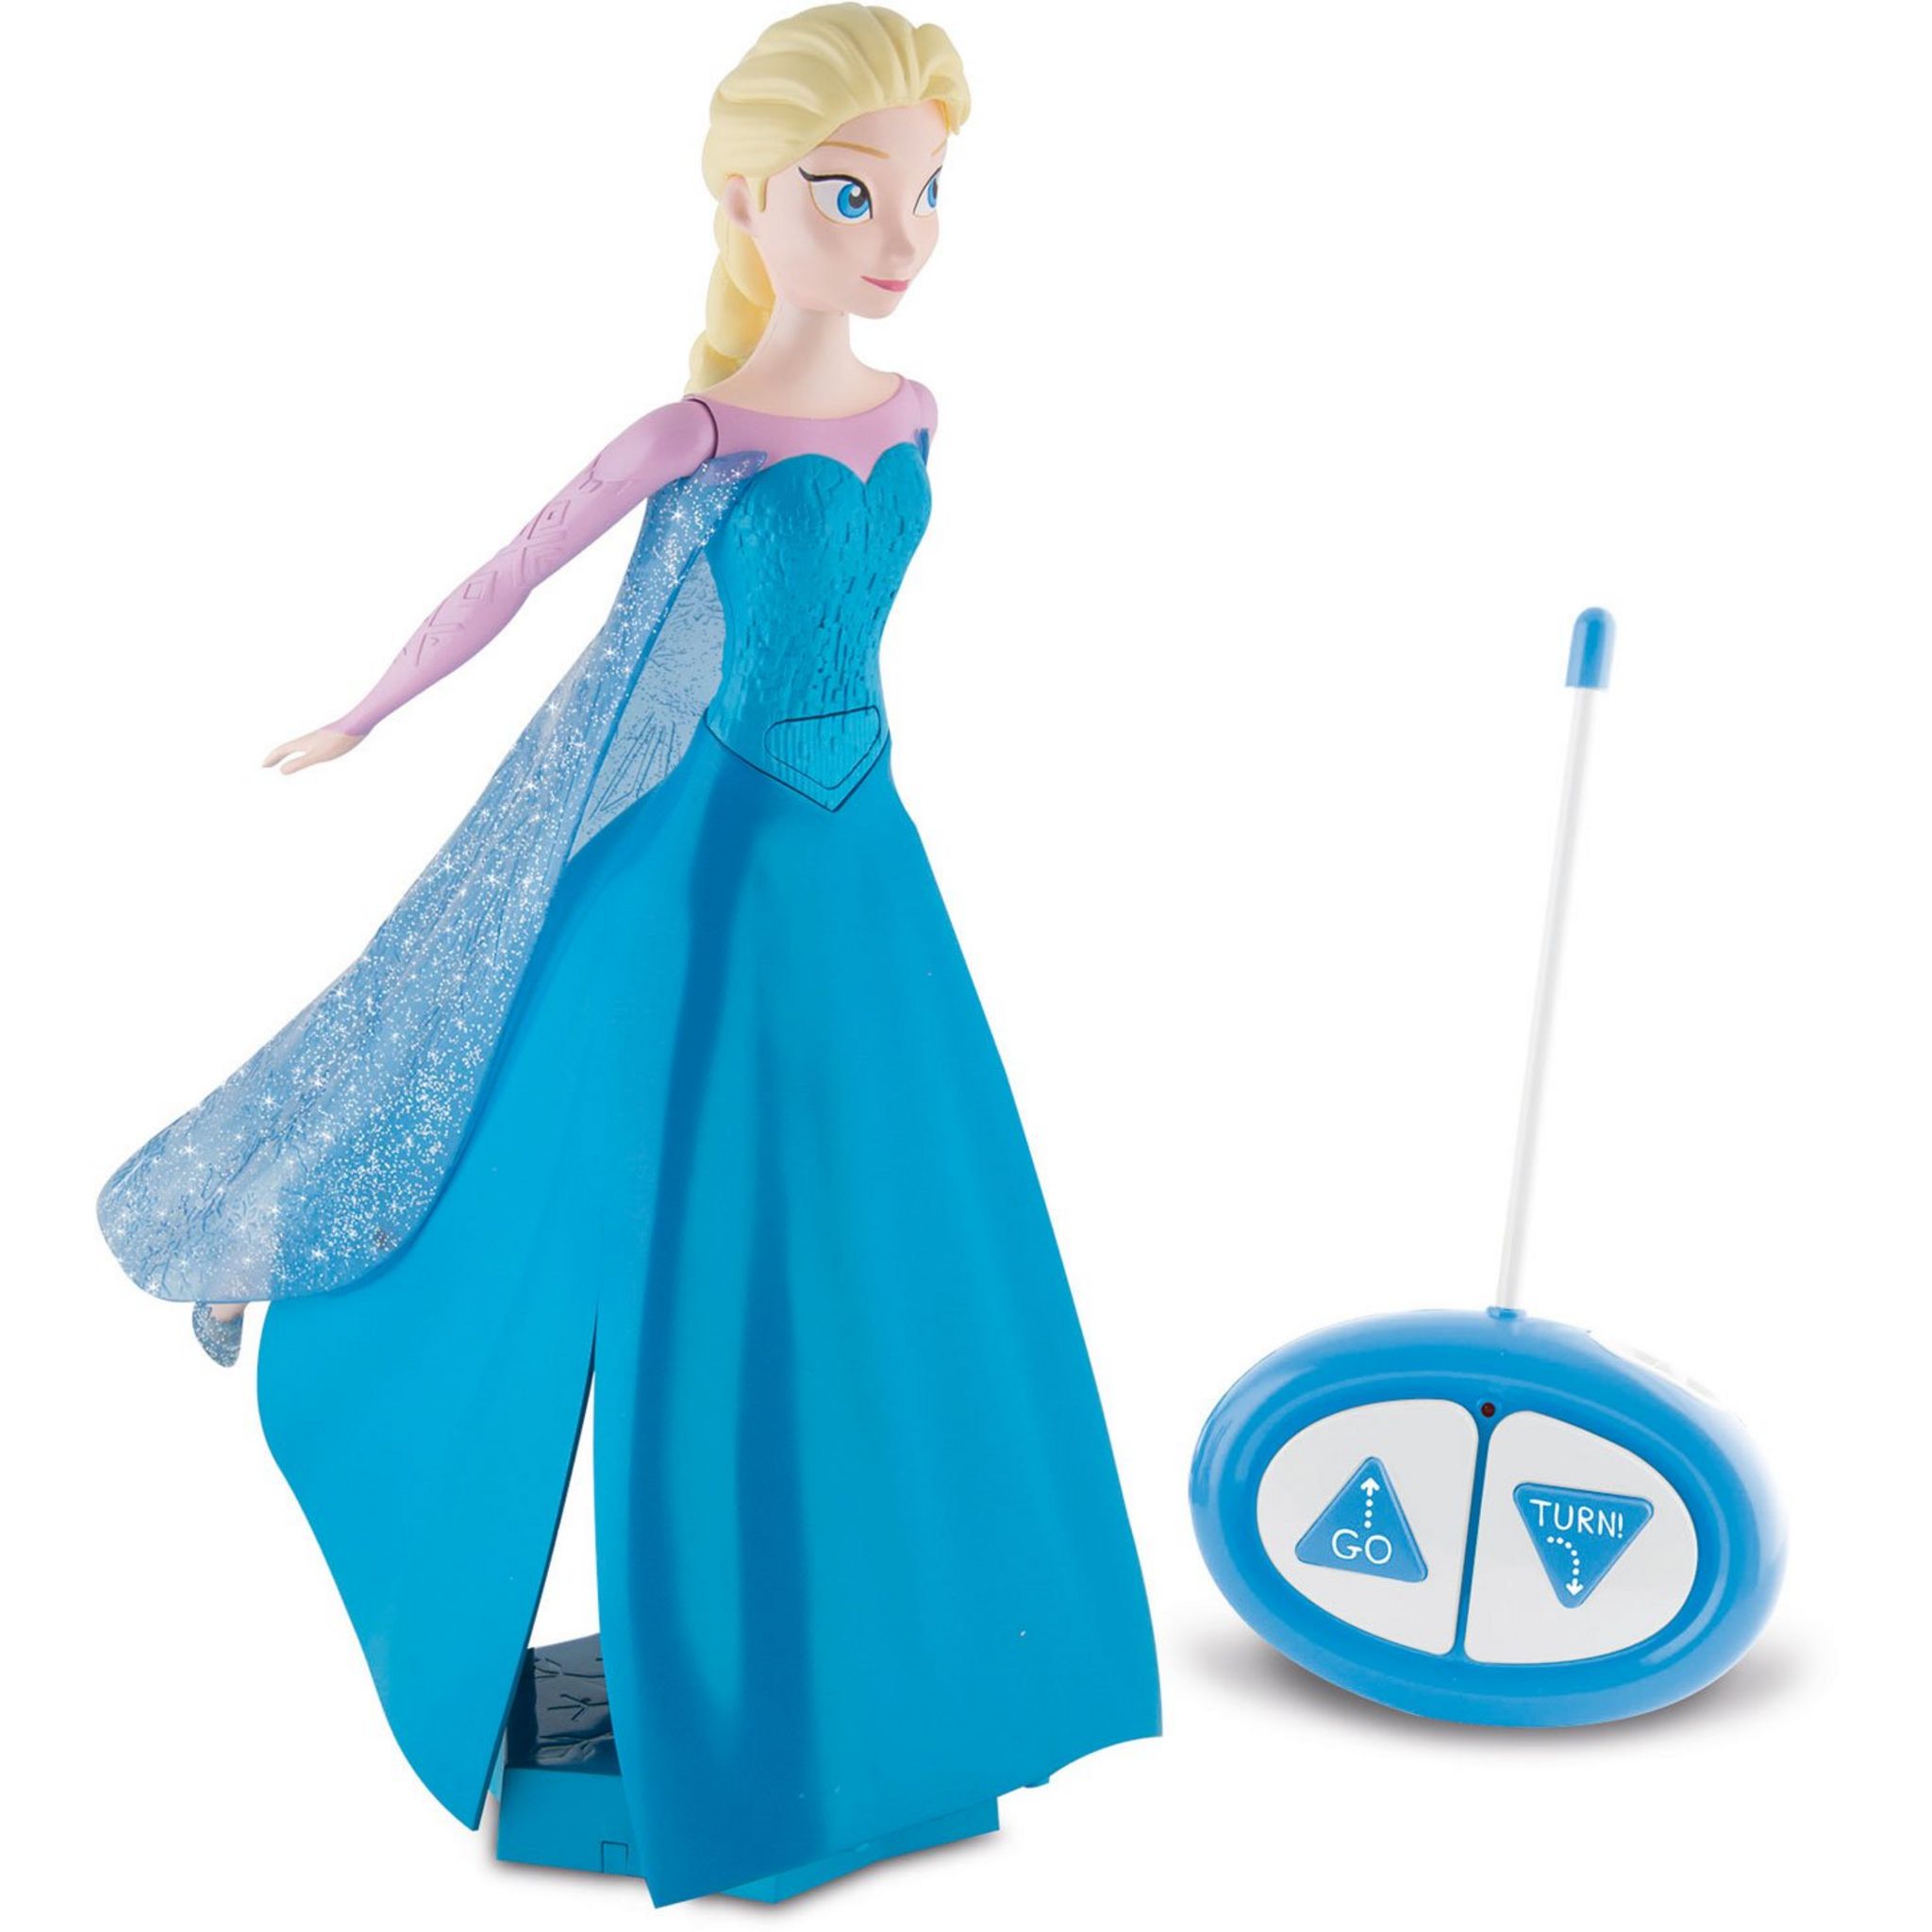 Figurine en carton Elsa de profil avec robe bleue La Reine des